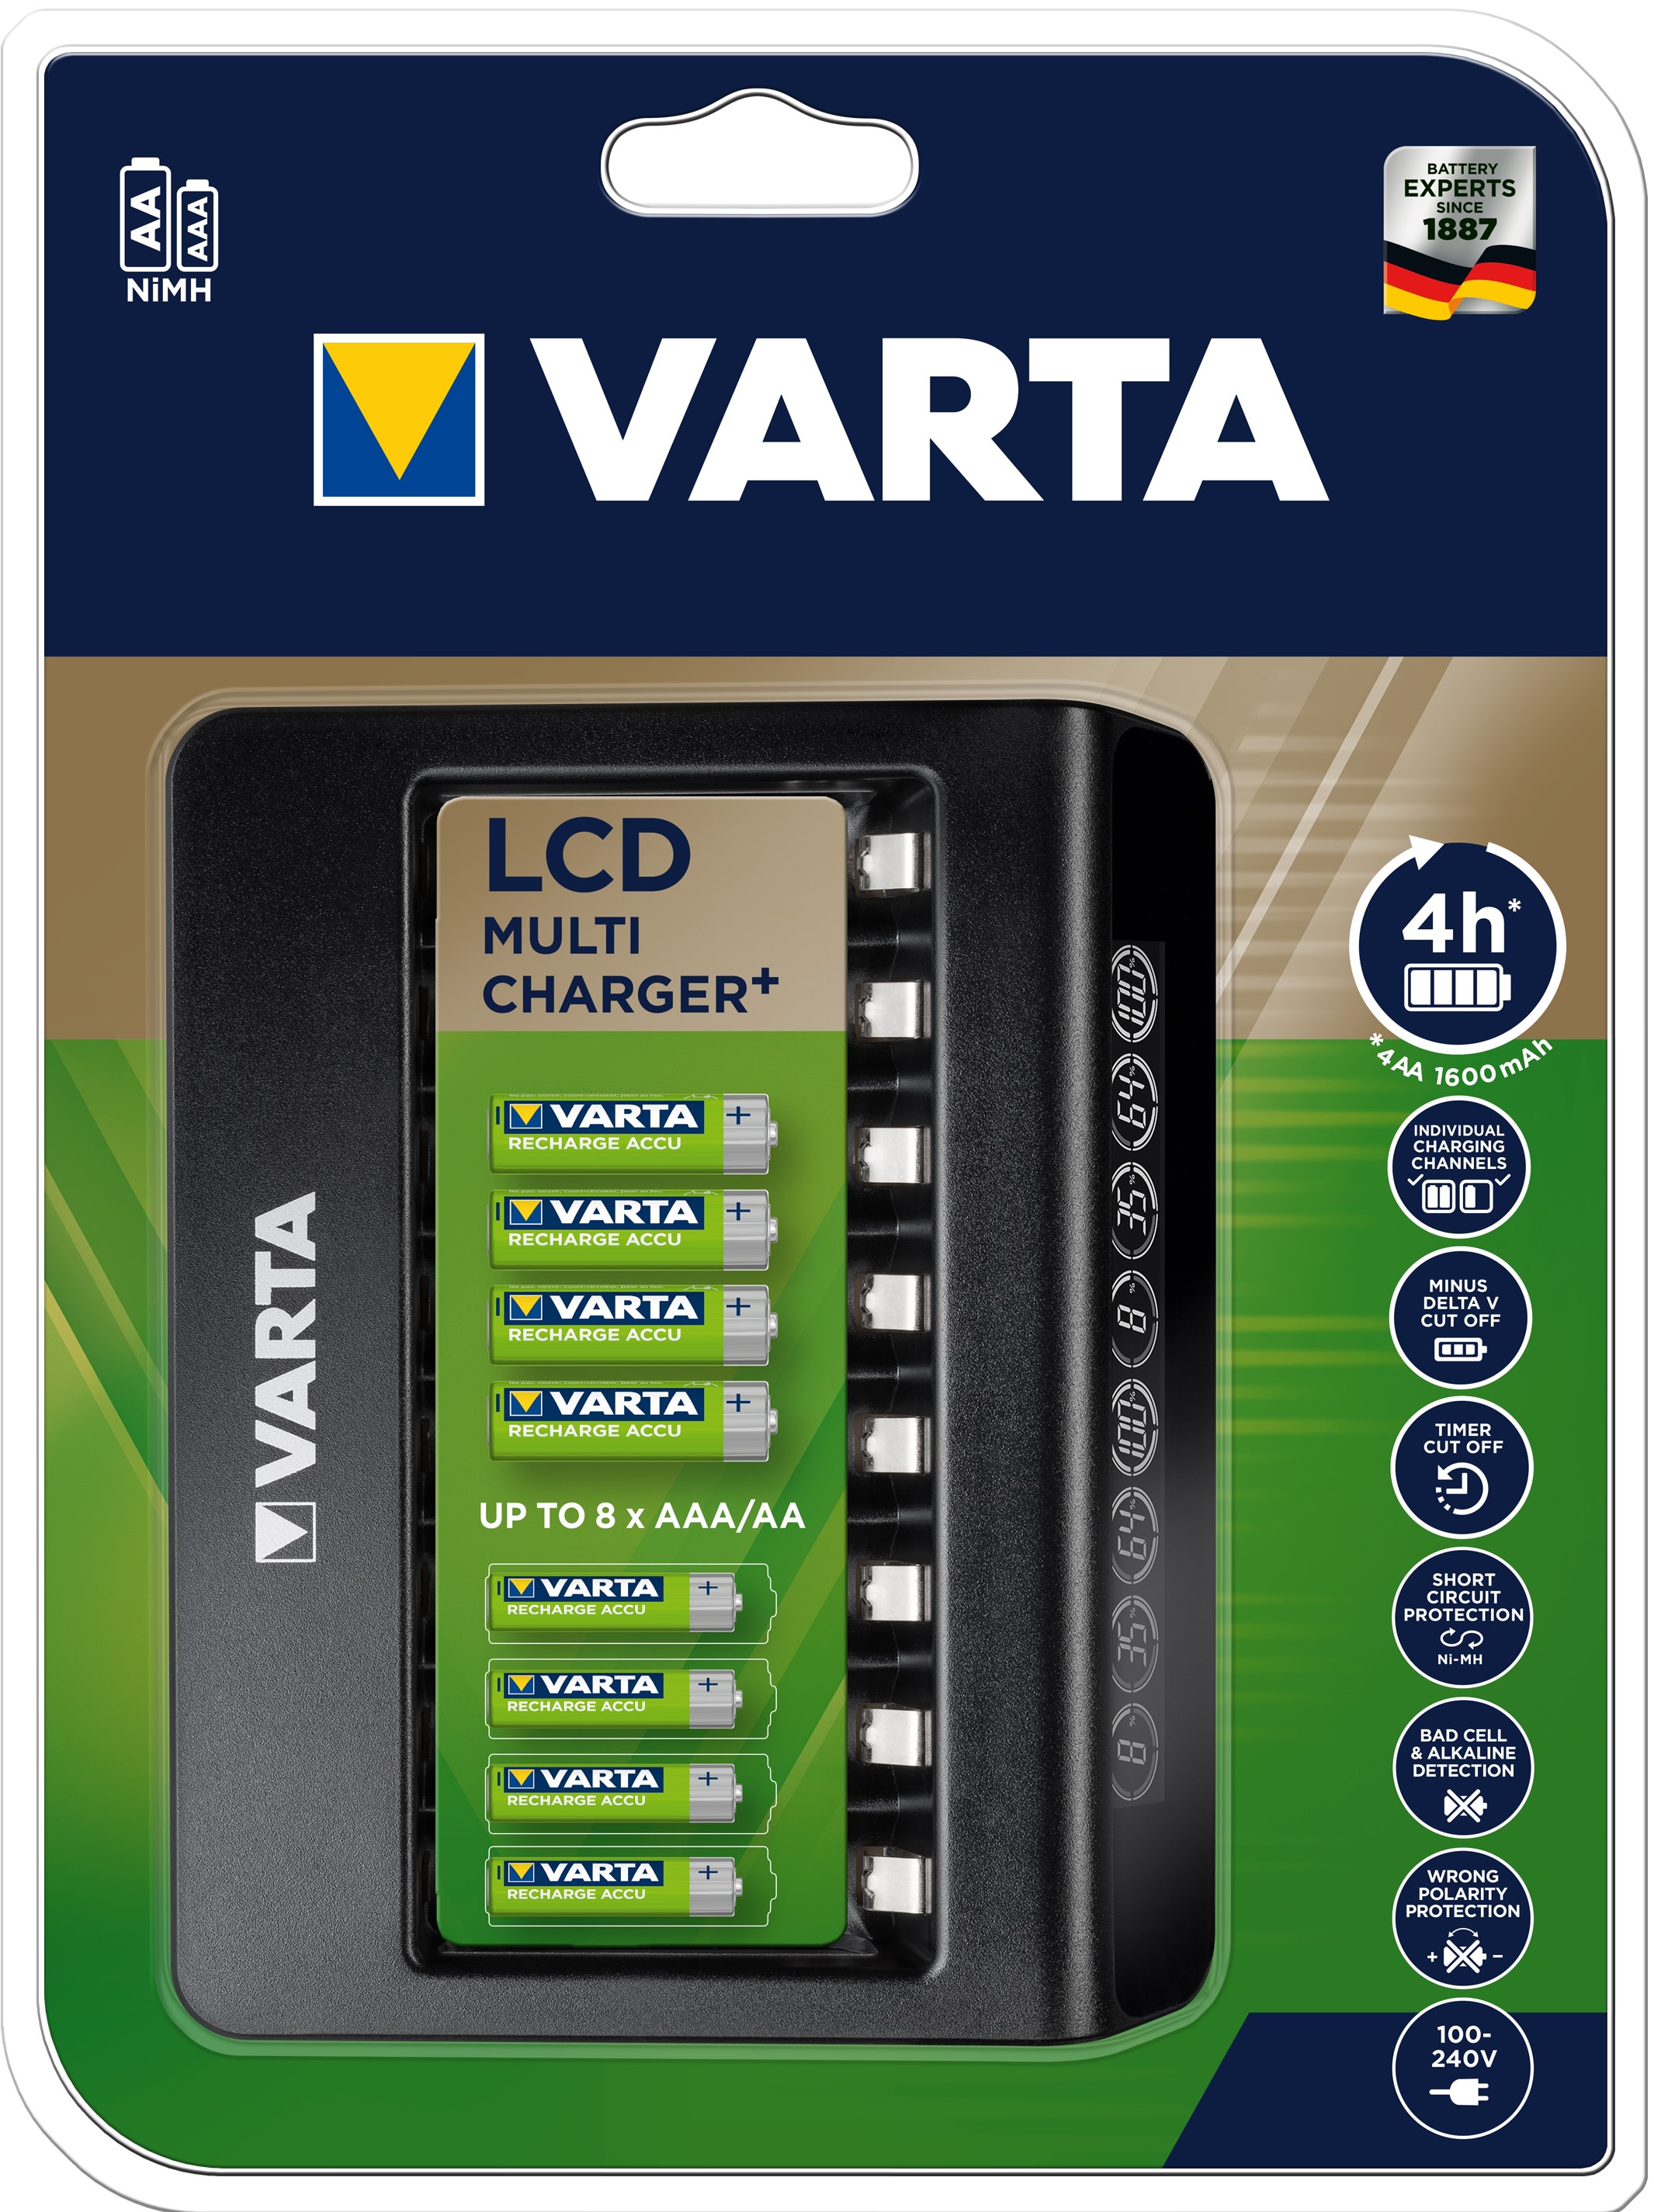 Varta - LCD MULTI CHARGER+ sans accu